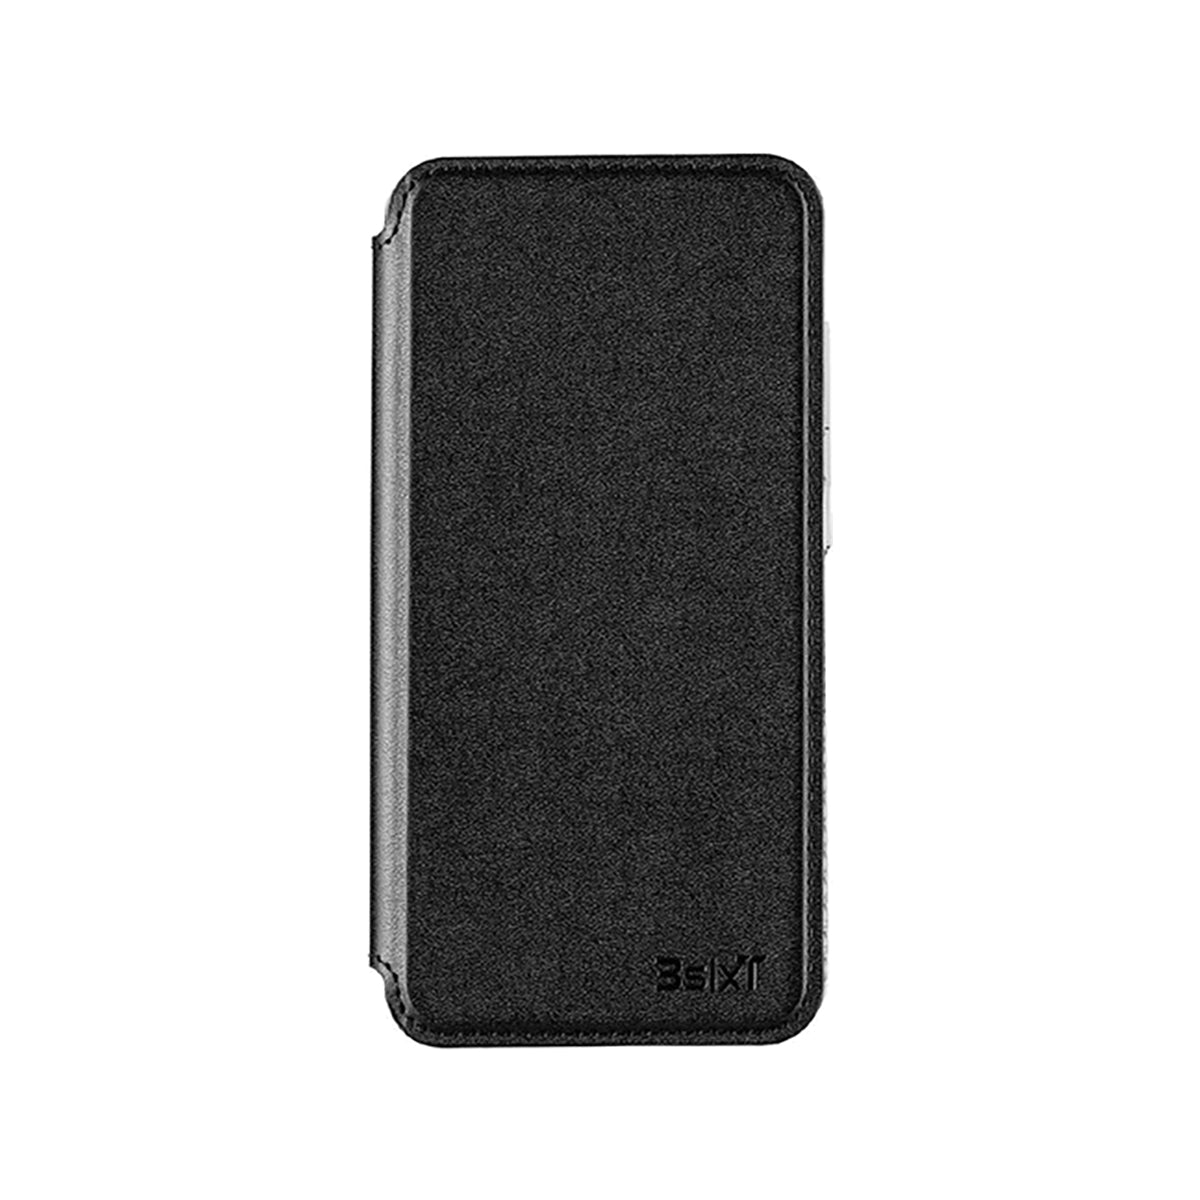 3sixT SlimFolio 1.0 Folio Case for Samsung S21 FE - Black